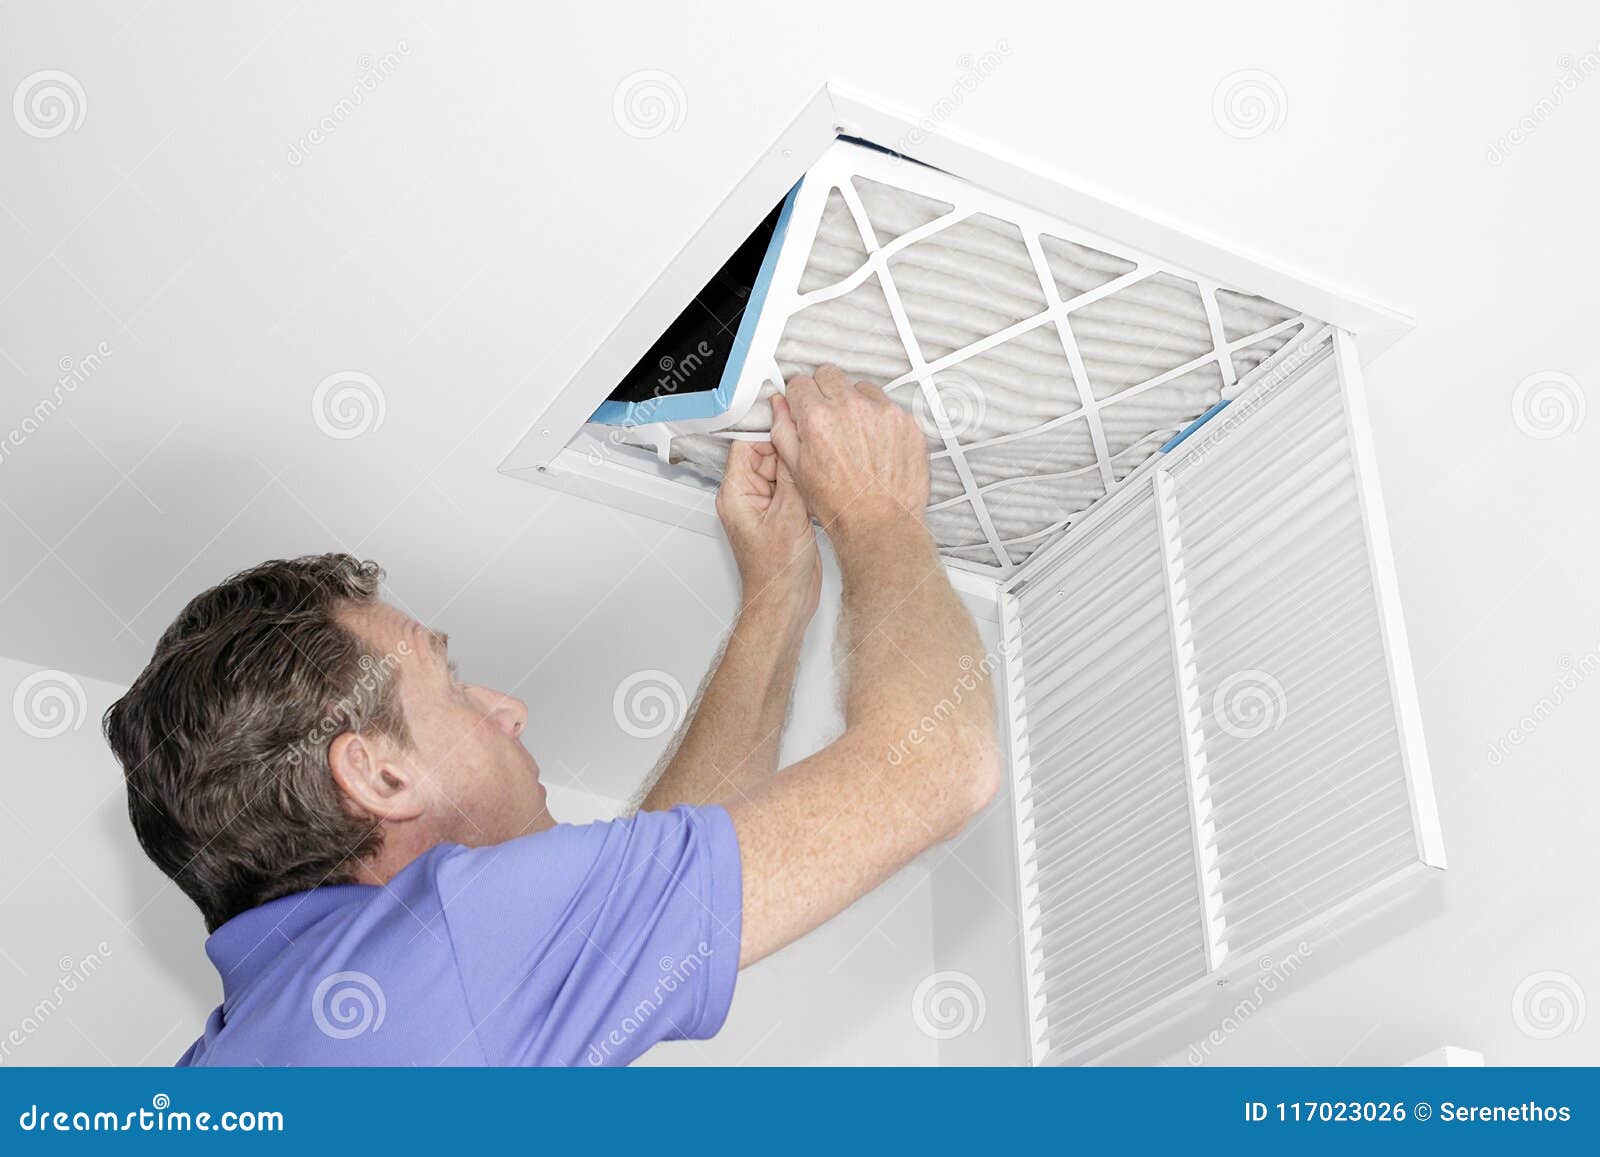 man removing dirty air filter